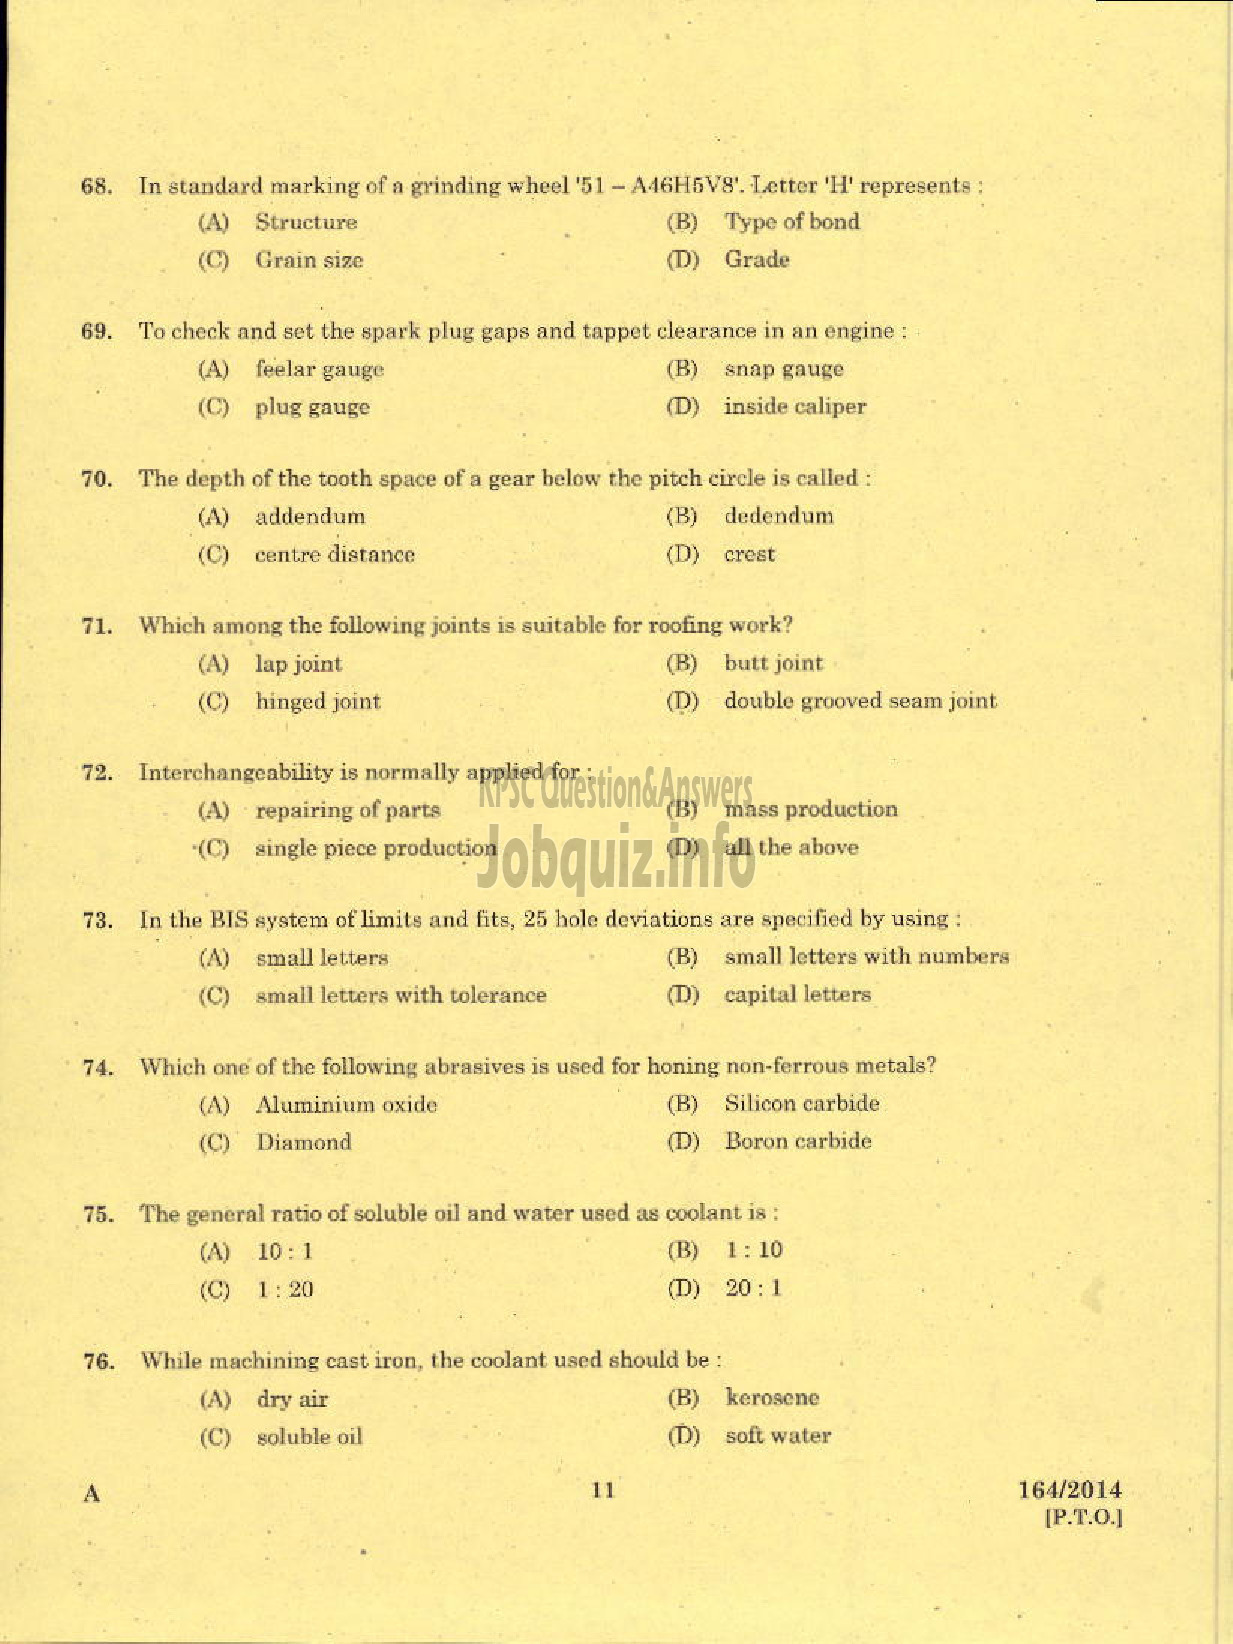 Kerala PSC Question Paper - TRADESMAN FITTING TECHNICAL EDUCATION-9